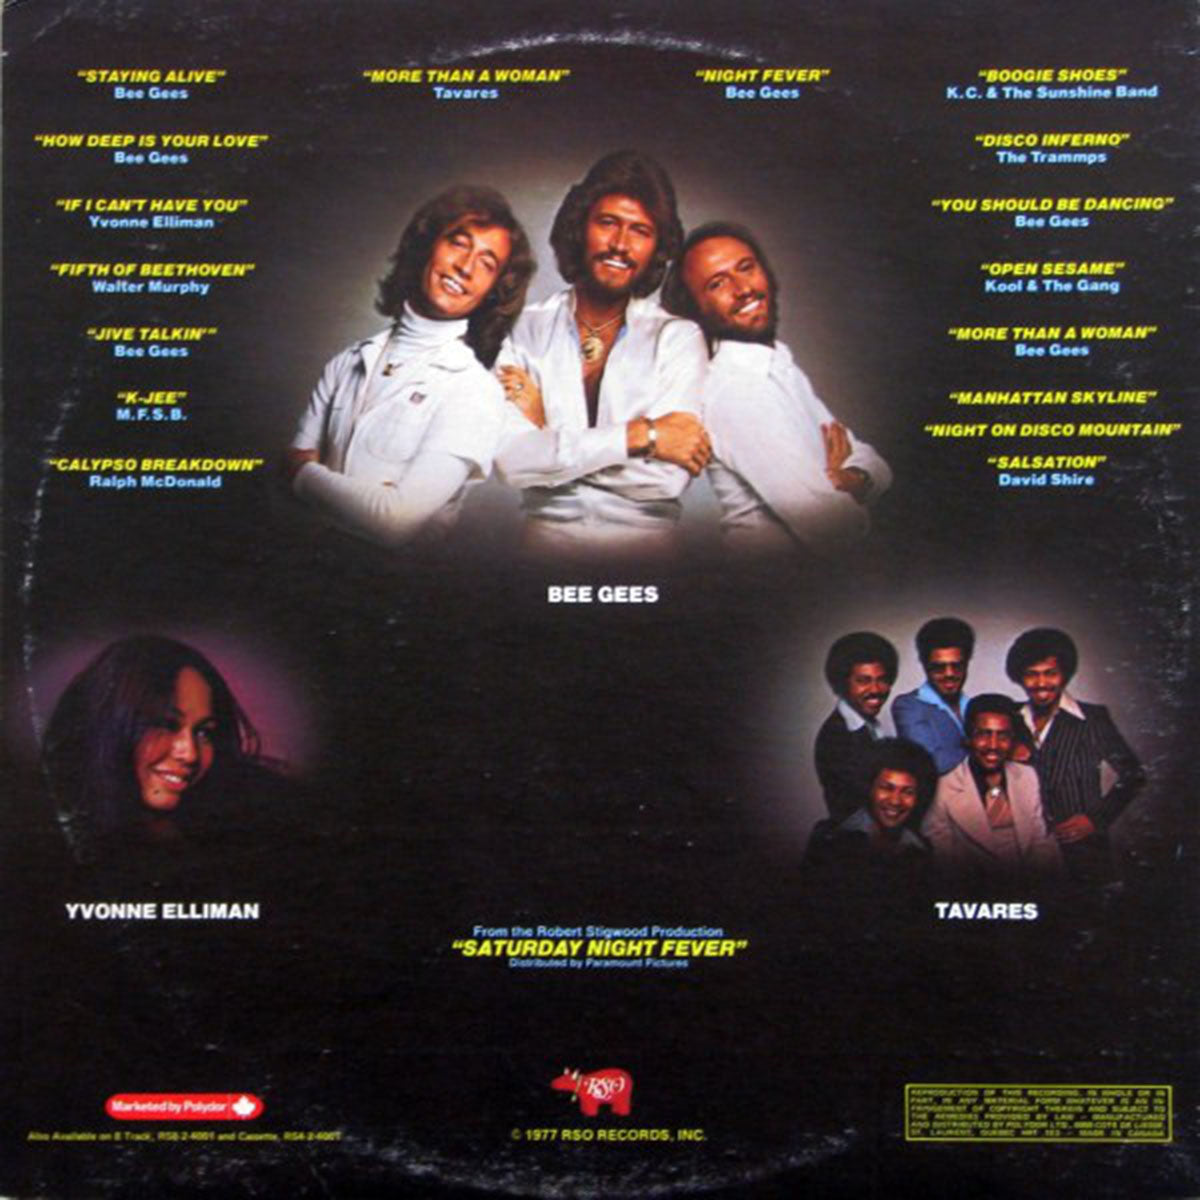 Saturday Night Fever - The Original Movie Soundtrack - 1977!